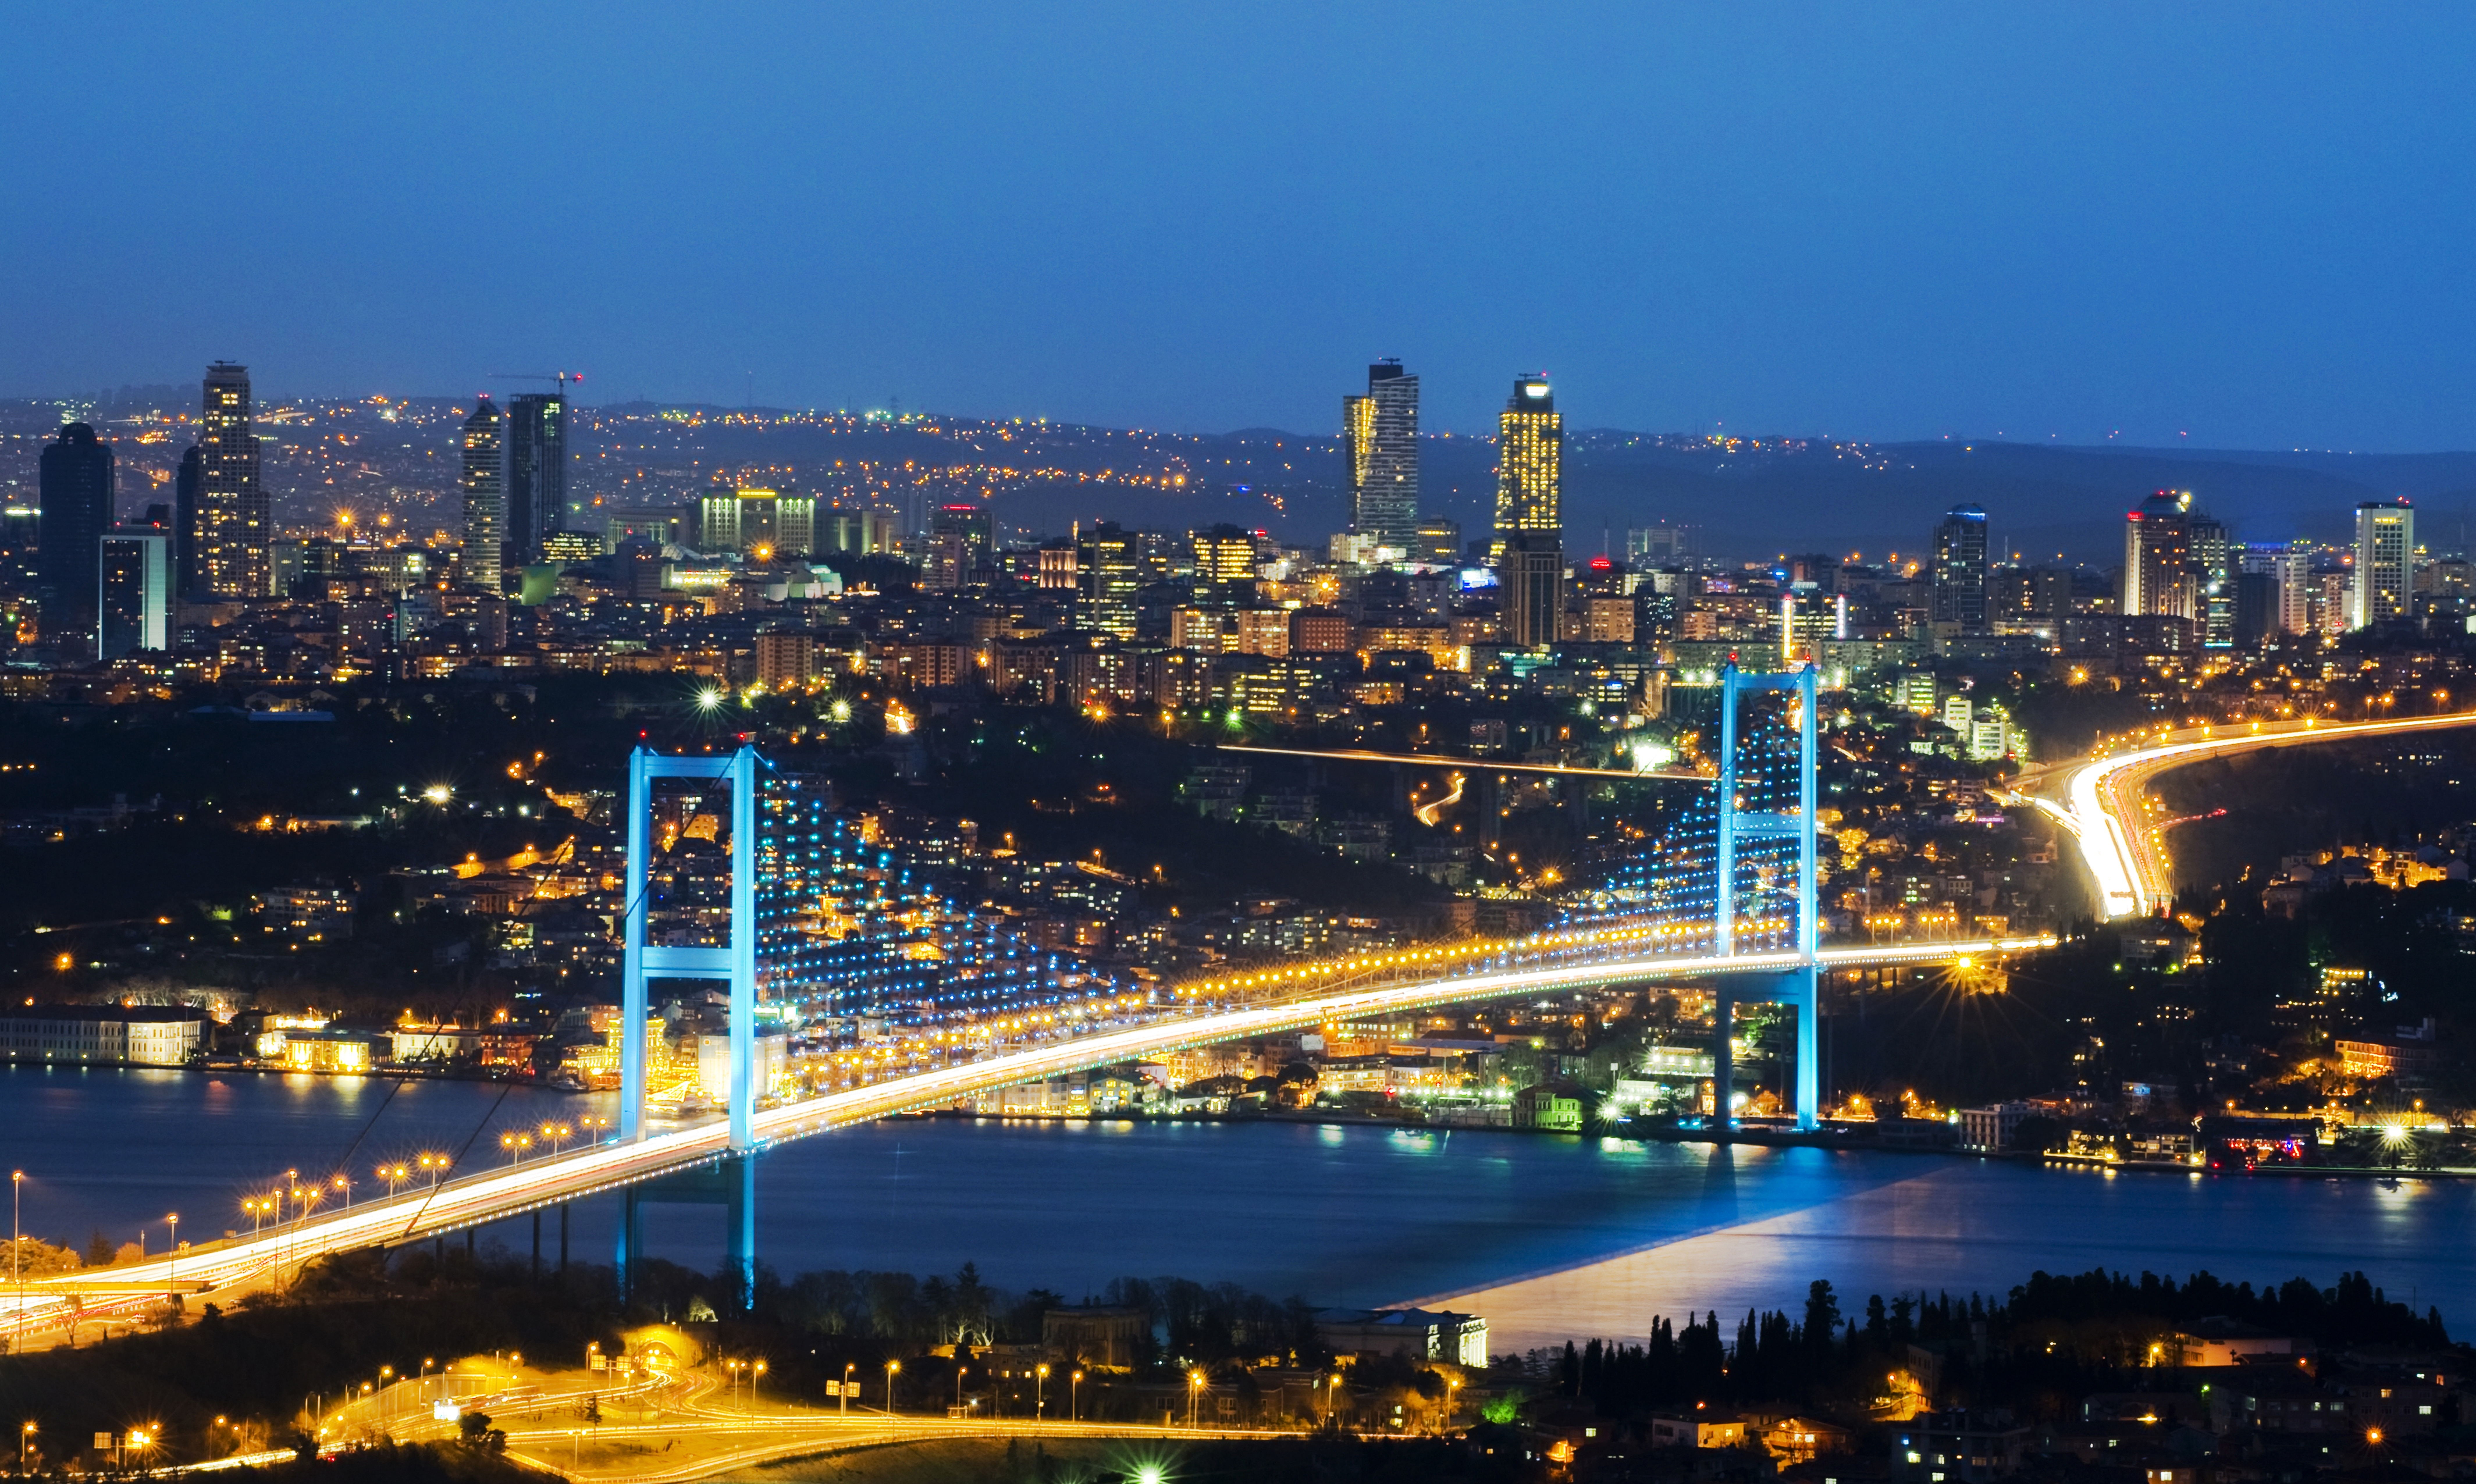 The Night Of Bosphorus Brudge 8k Ultra HD Wallpaper